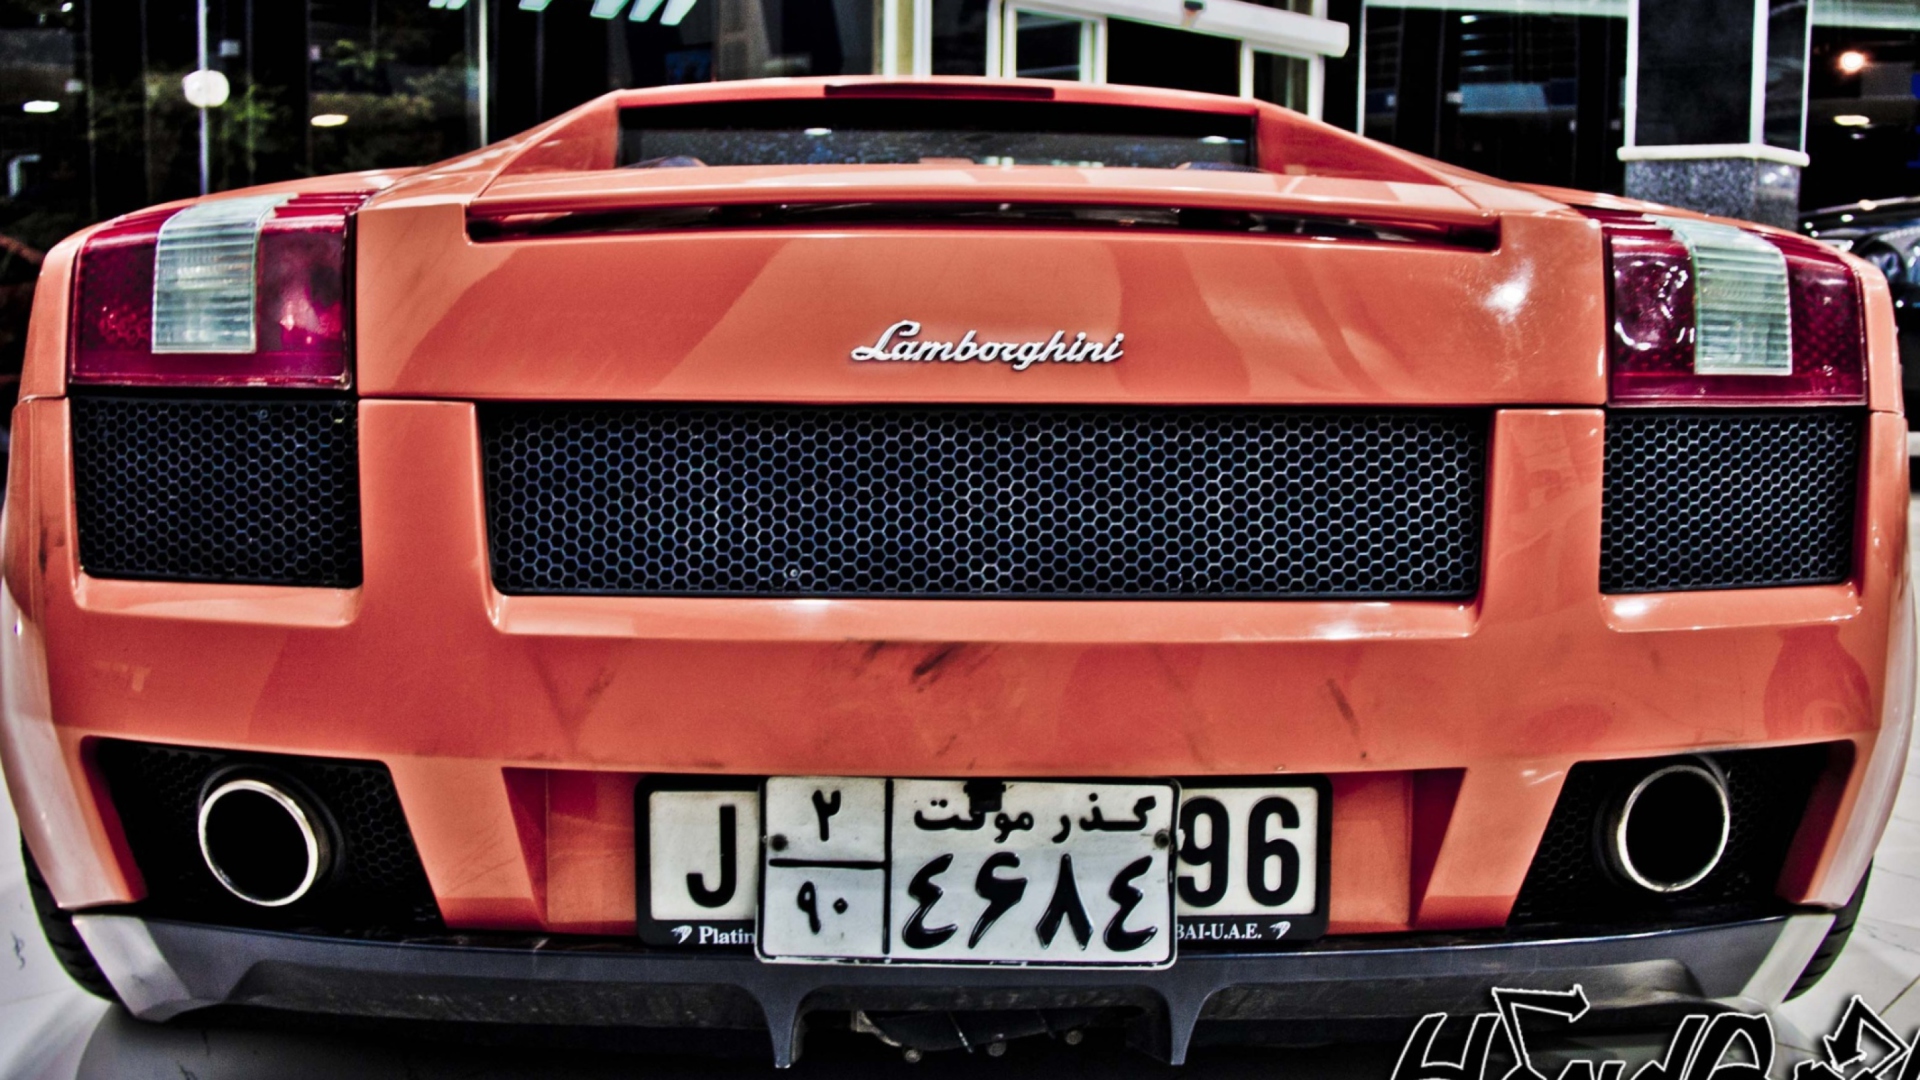 Sfondi Lamborghini 1920x1080